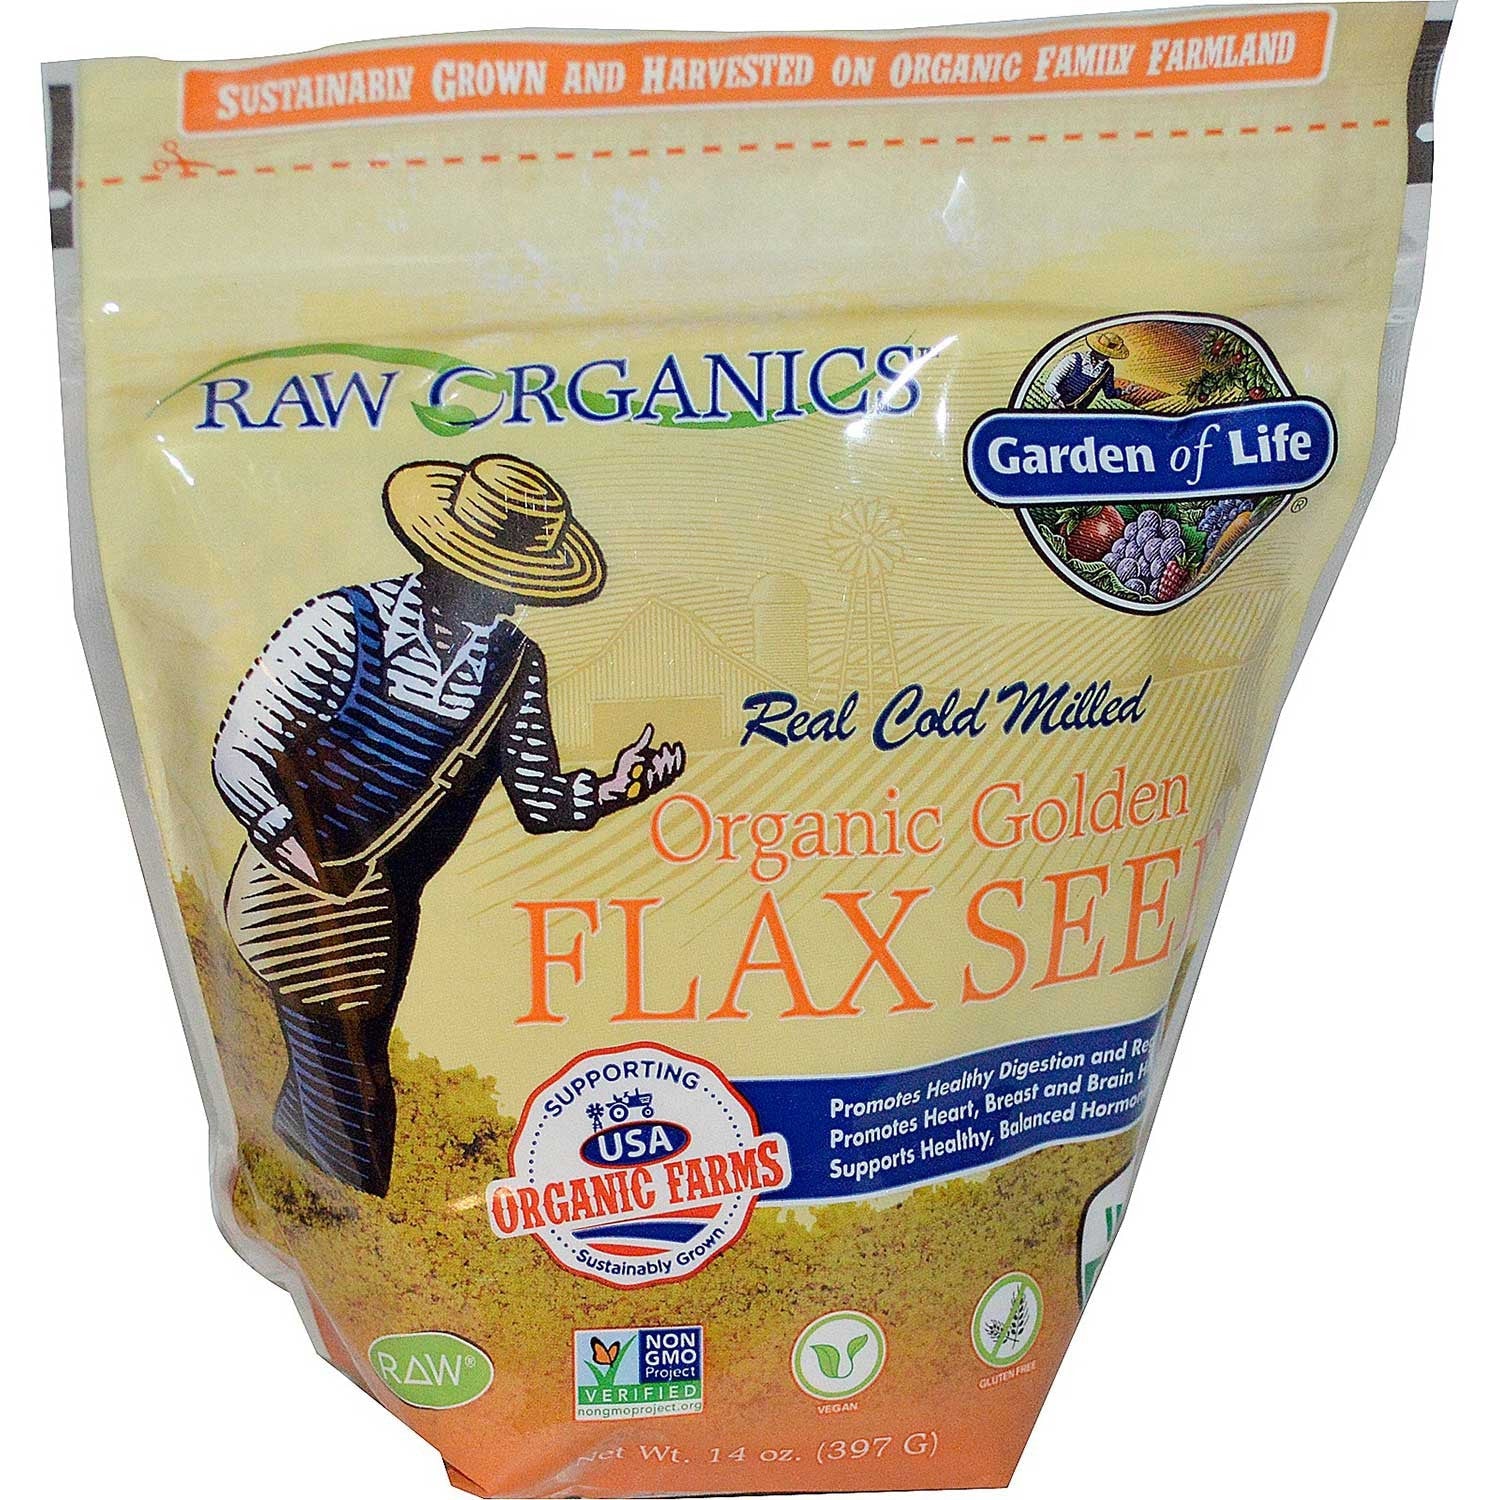 Garden of Life RAW Organics - Organic Golden Flax Seed, 397 g.-NaturesWisdom